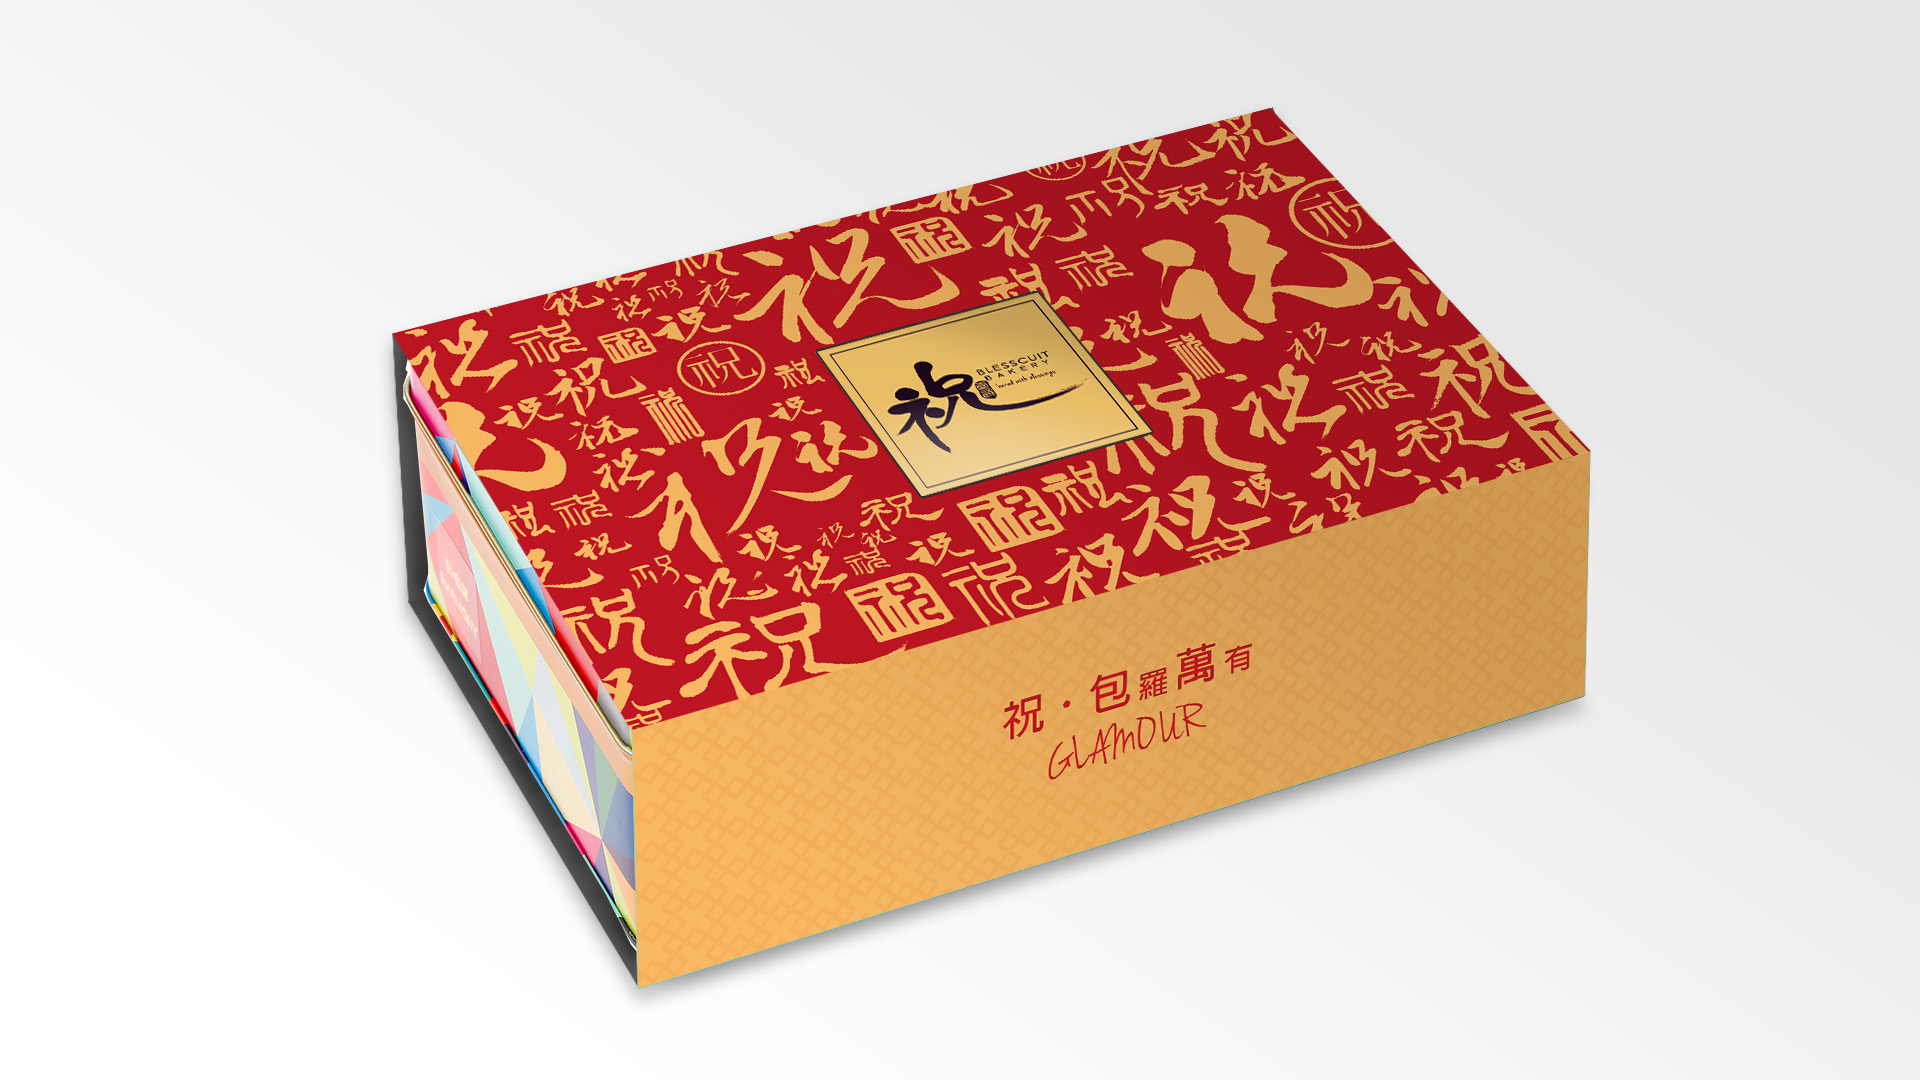 D2 Studio 市场营销策划, 品牌策划与平面设计公司的香港及广州中国团队为cookies brand安排平面设计与企业杂志设计packaging design and gift design 3